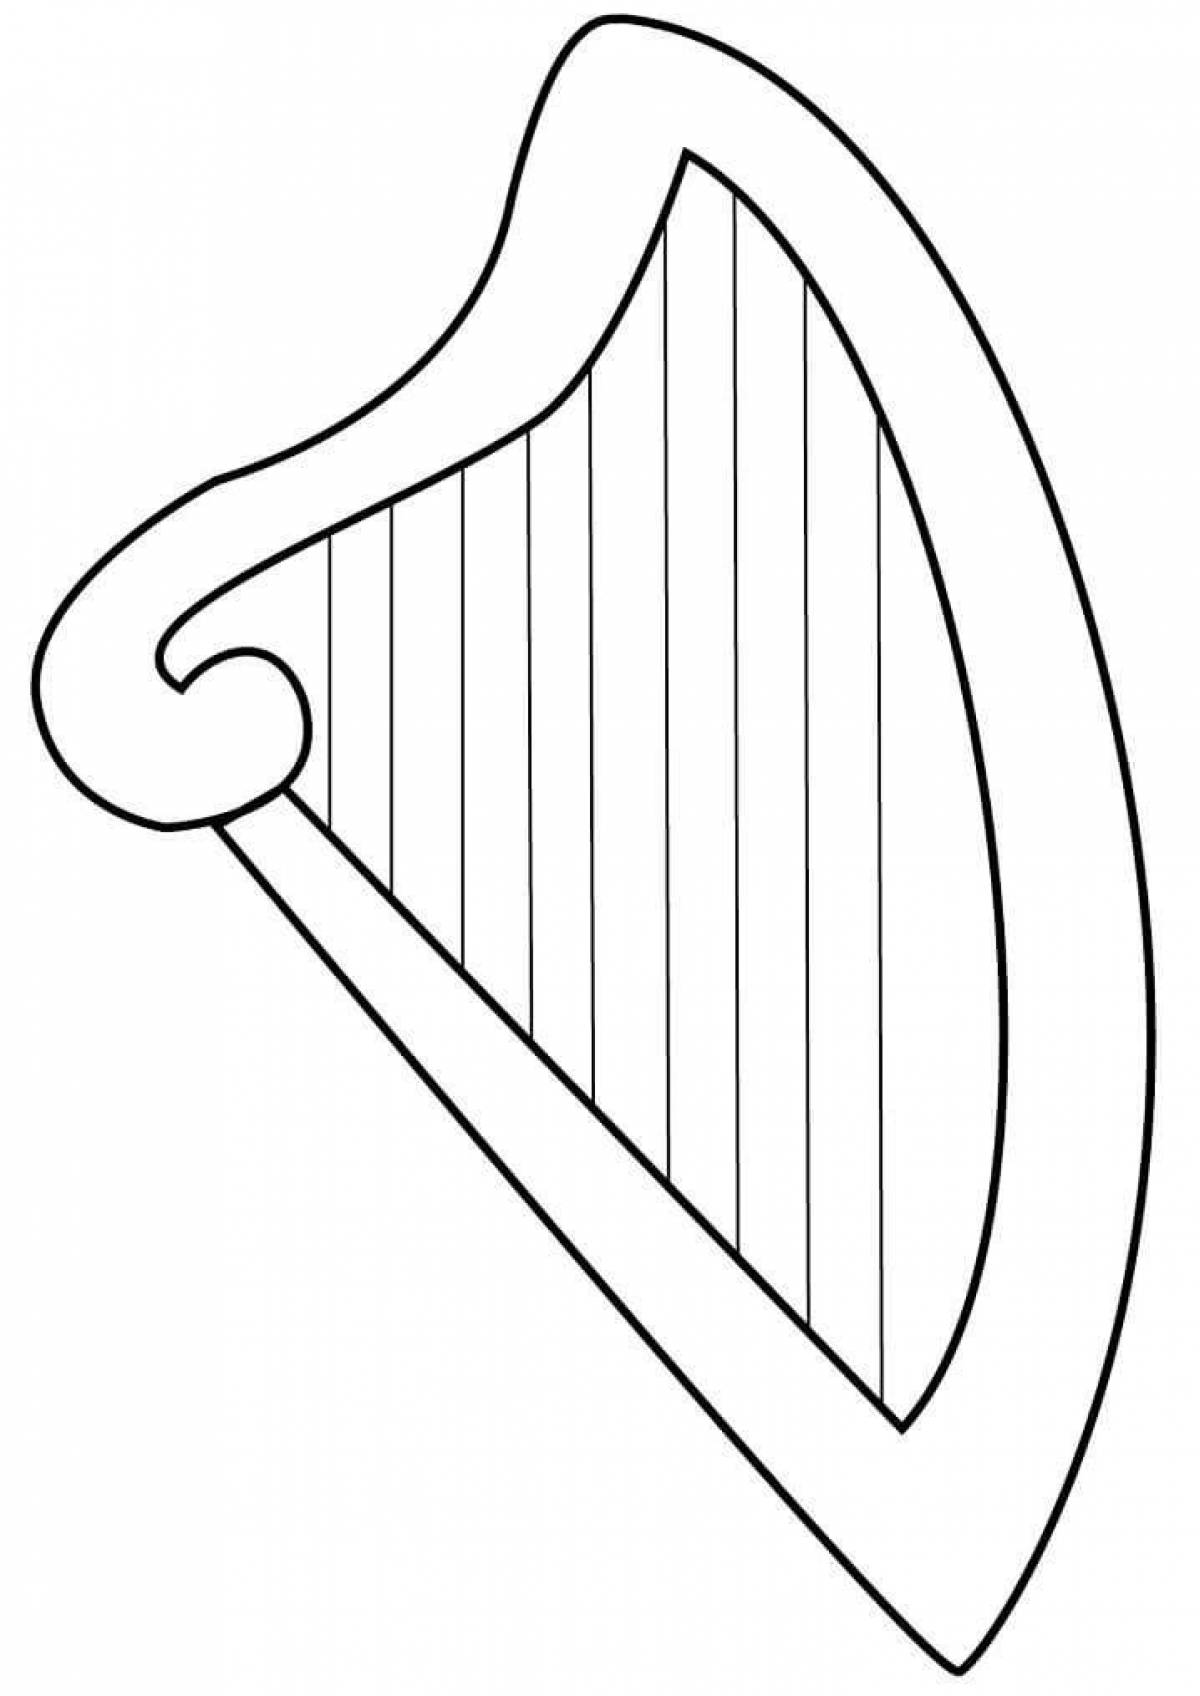 Coloring poetic harp